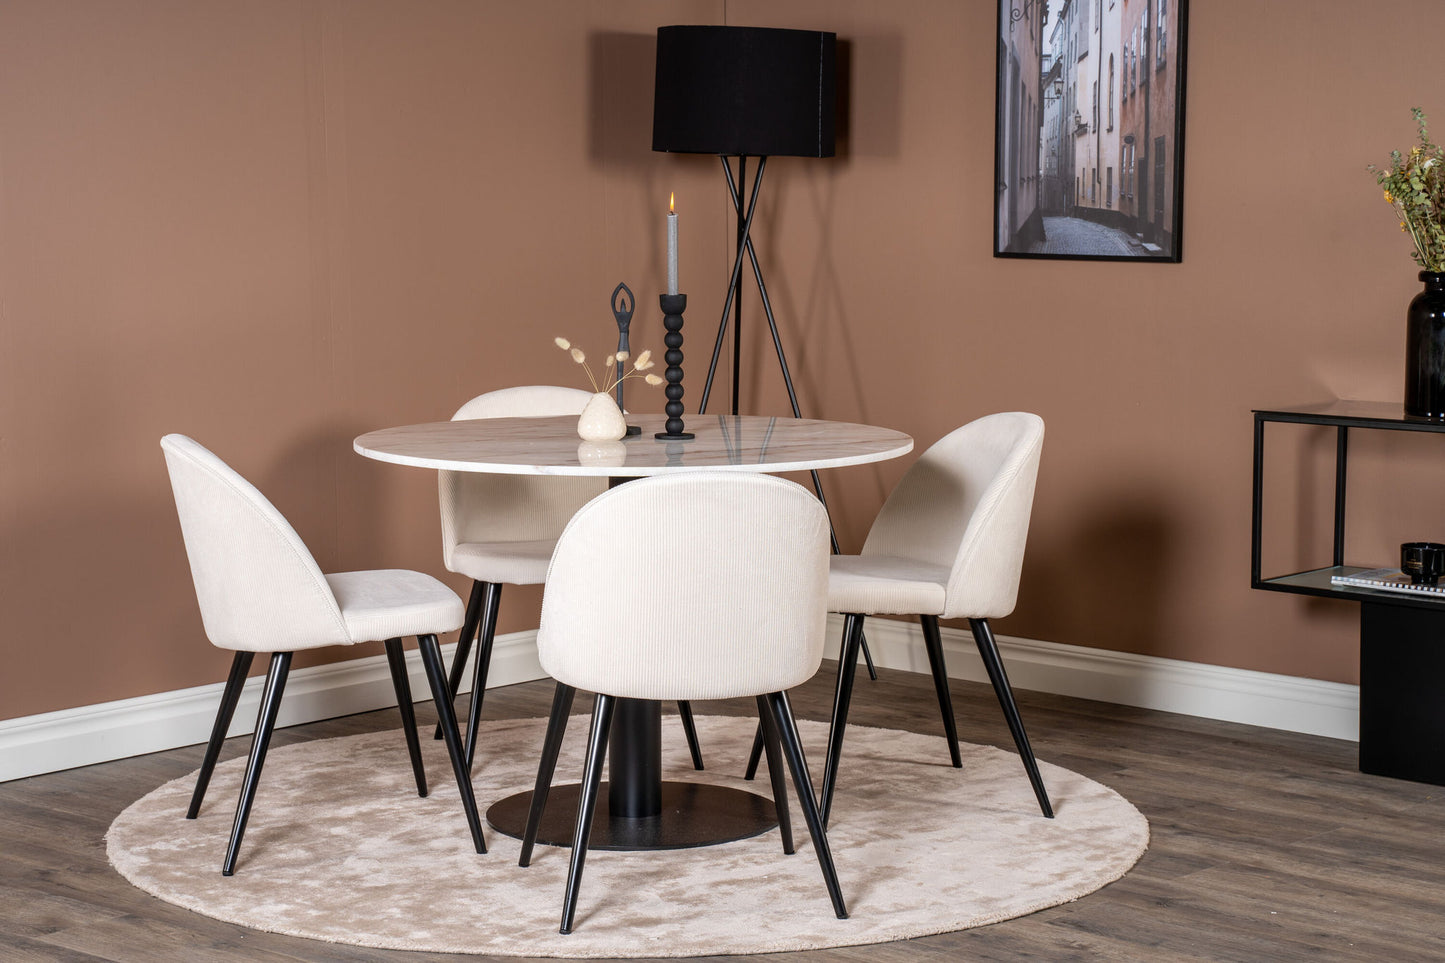 Estelle rundt Spisebord - Sort / Hvid marmor - ø106*H75+ velour Spisebordsstol - Bla